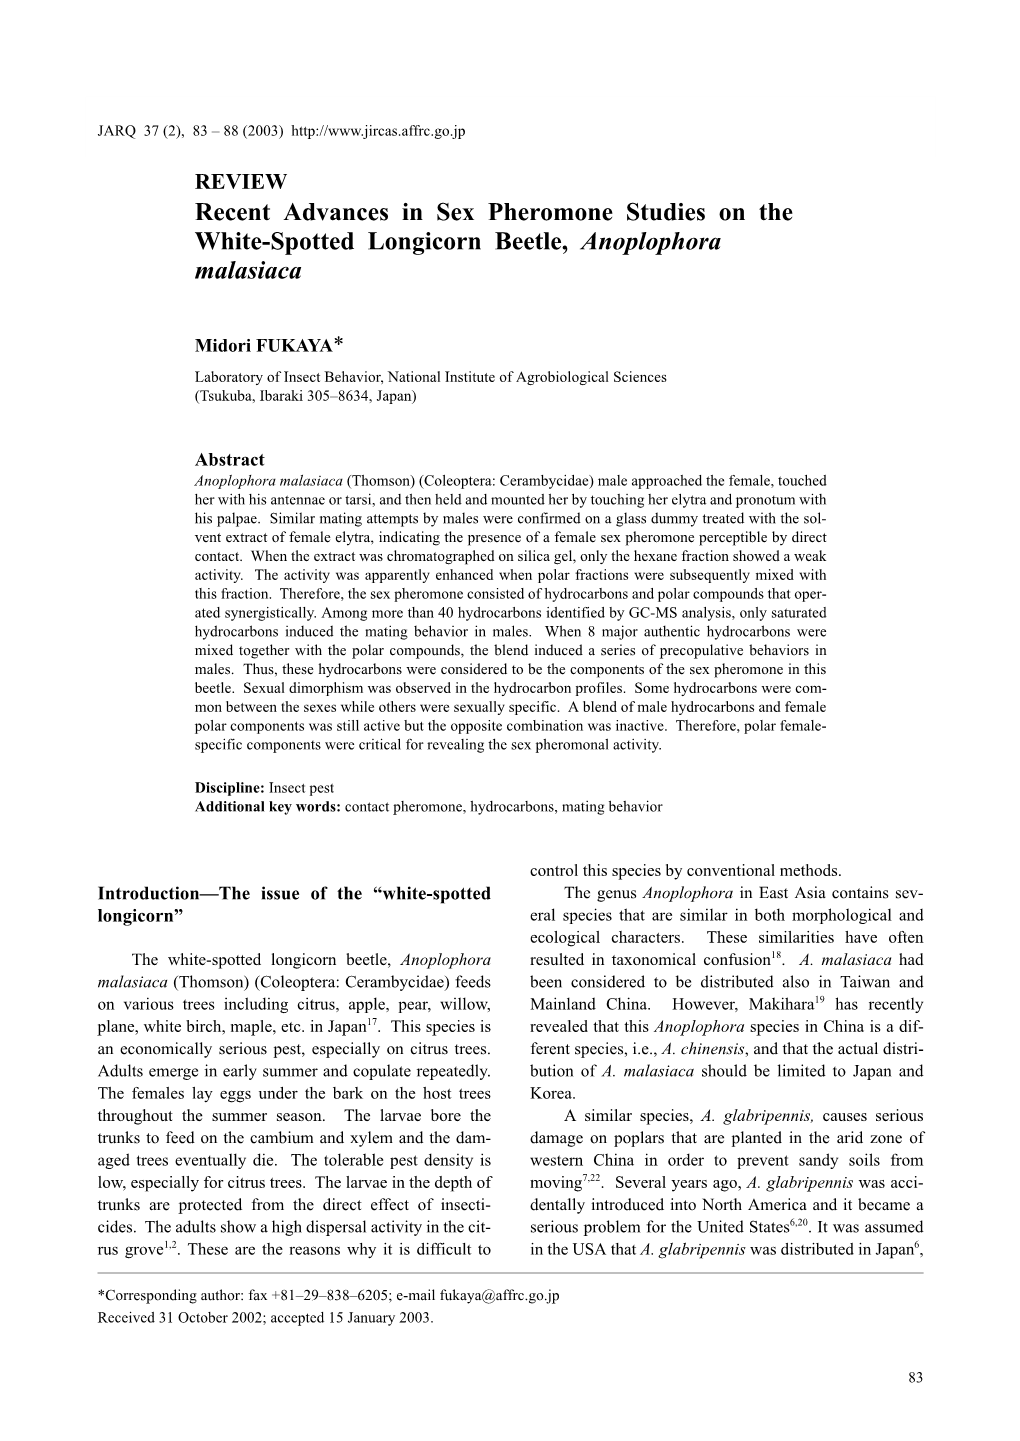 Recent Advances in Sex Pheromone Studies on the White-Spotted Longicorn Beetle, Anoplophora Malasiaca